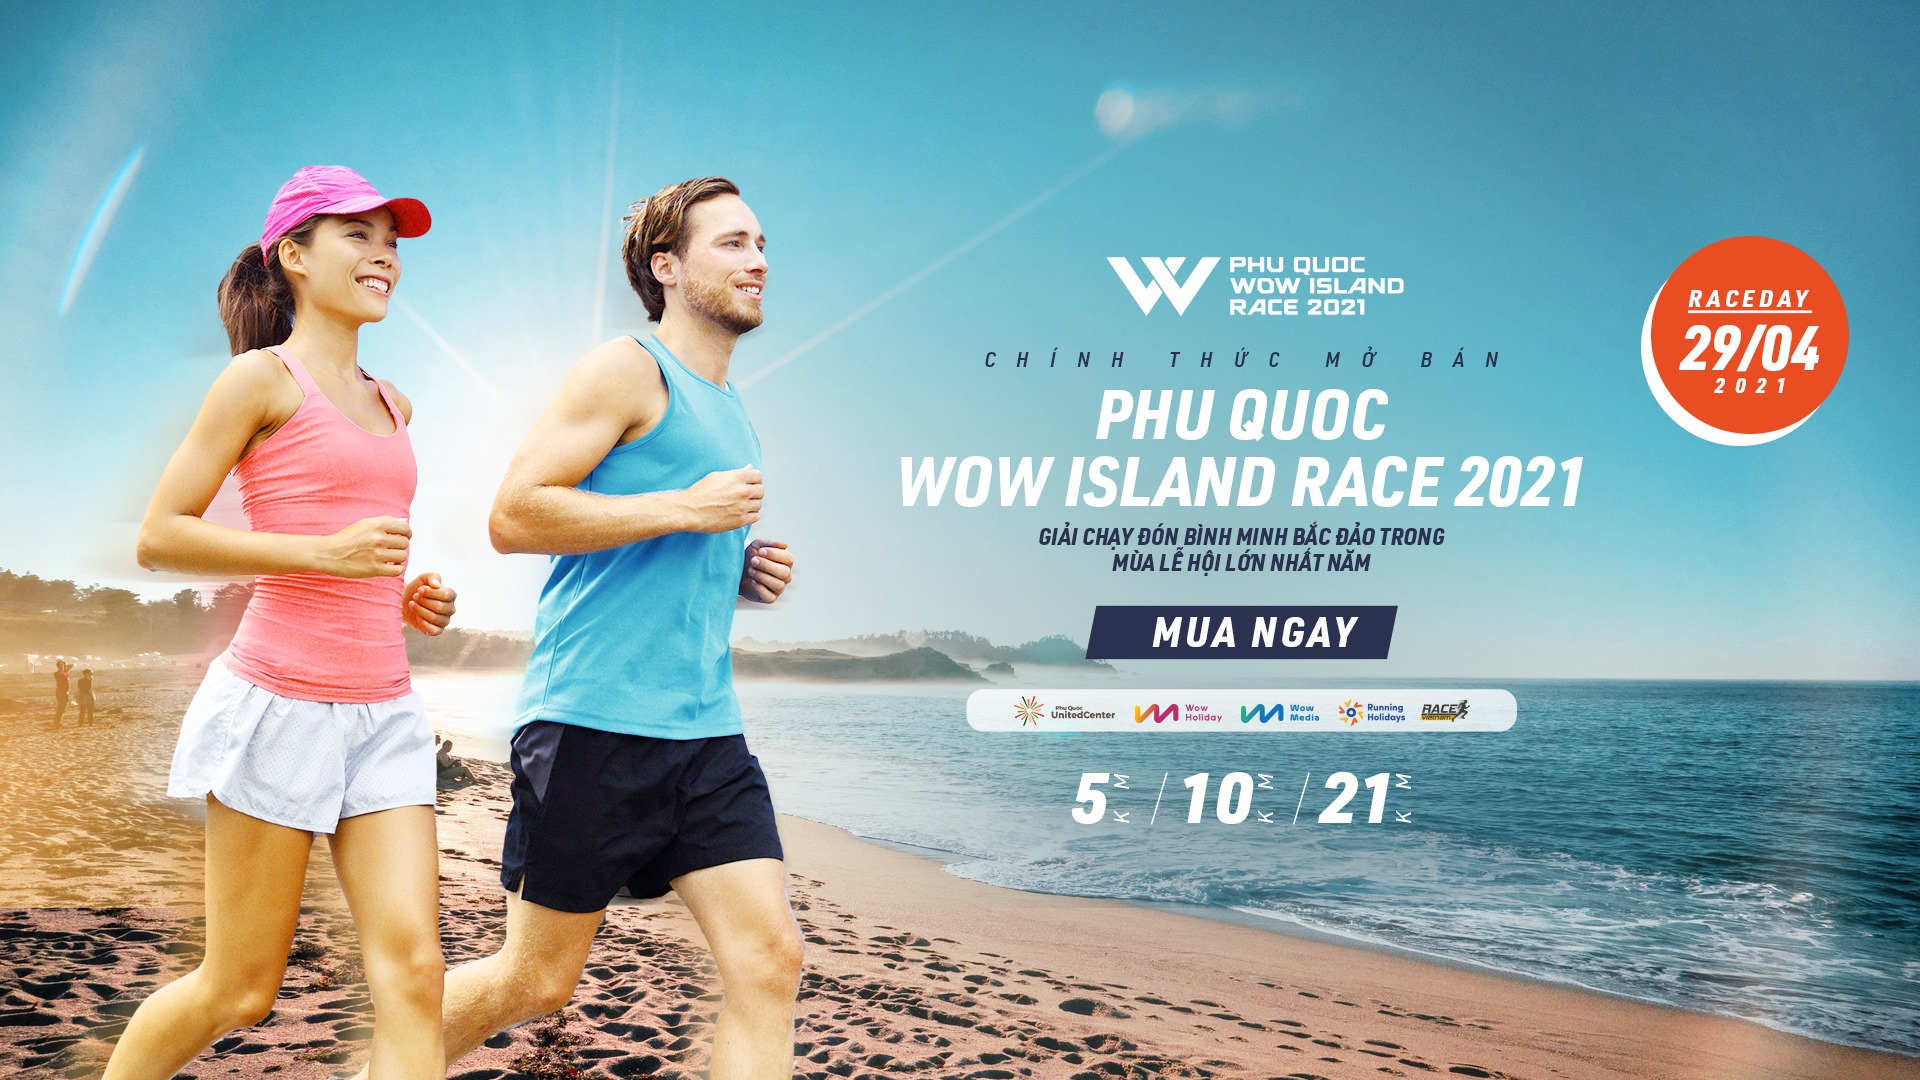 Phú Quốc WOW Island Race 2021 - phu quoc wow island race 2021